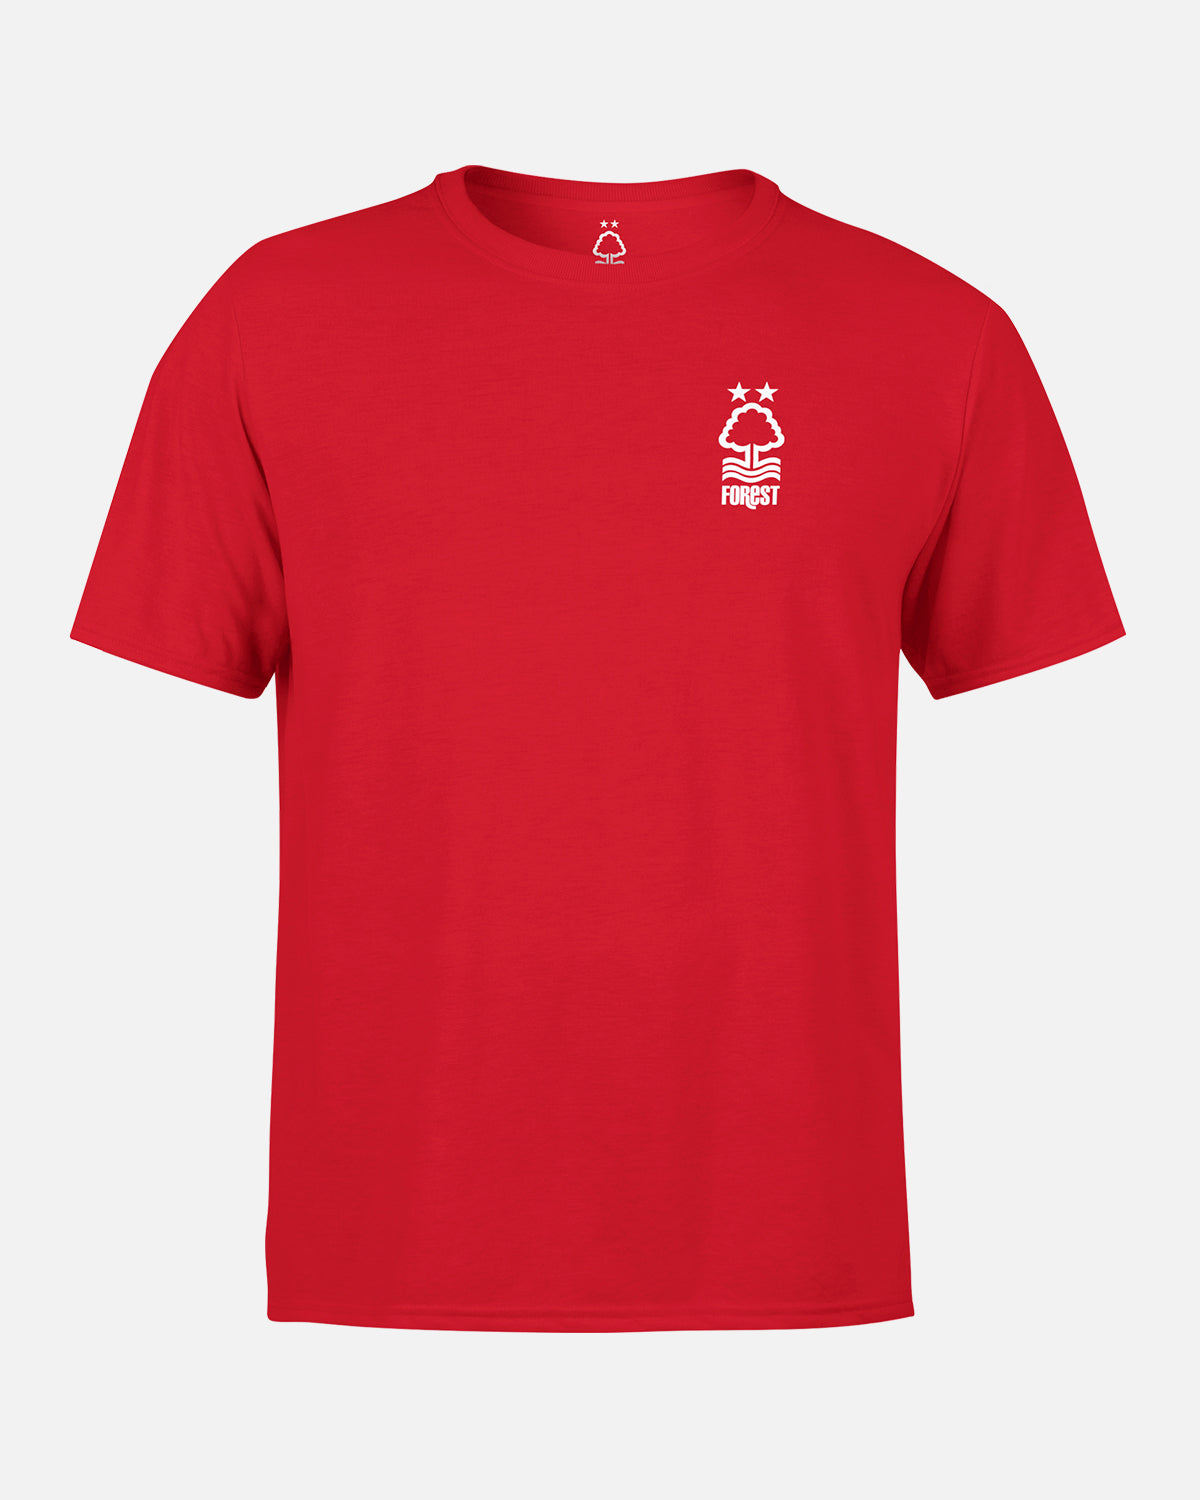 NFFC Junior Red Vertical T-Shirt